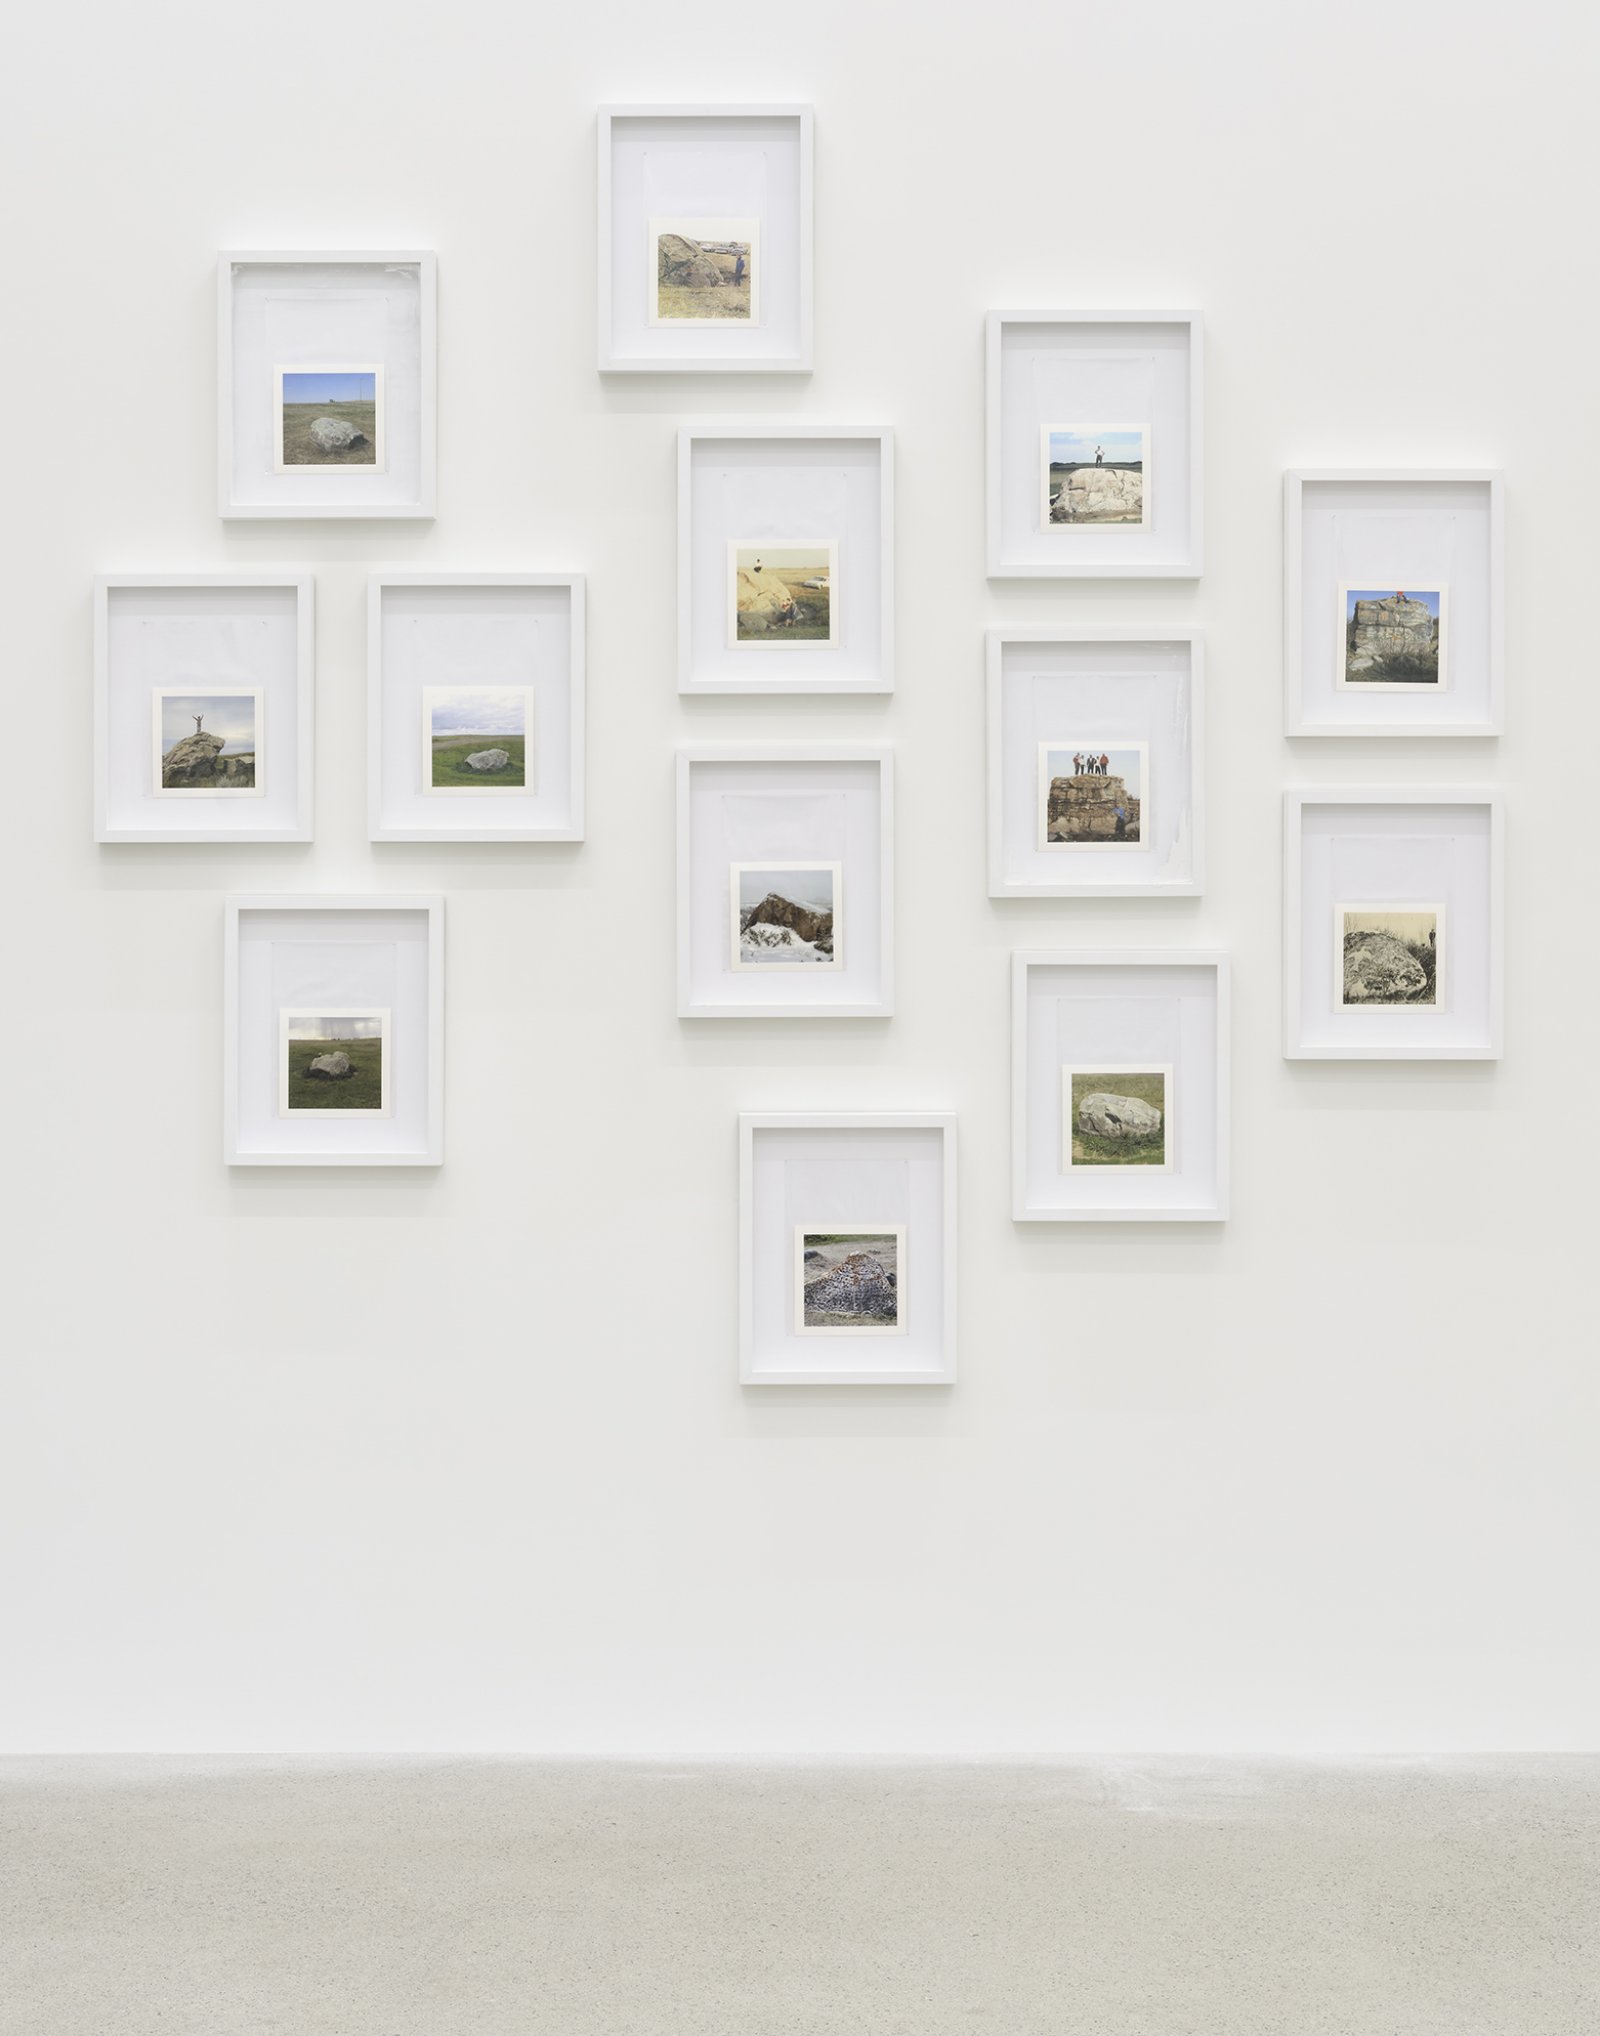 Duane Linklater, Erratics, 2017, 13 framed digital prints, plastic bags, pins, 70 x 76 in. (178 x 193 cm)